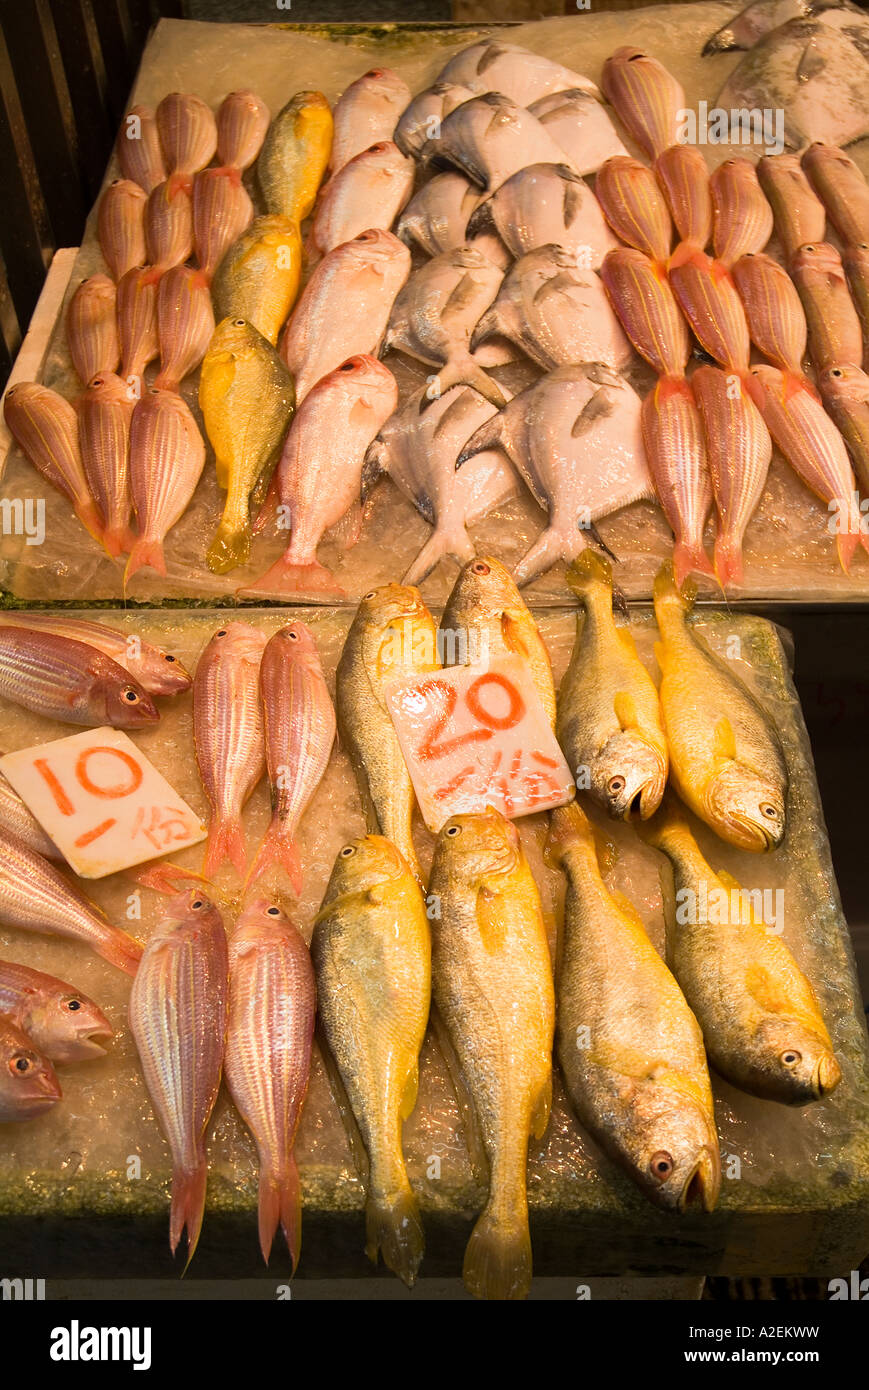 dh Chun Yeung Street Market HK NORTH POINT HONG KONG Cold ice slab fresh wet fish display for sale price tag fishmonger China Stock Photo